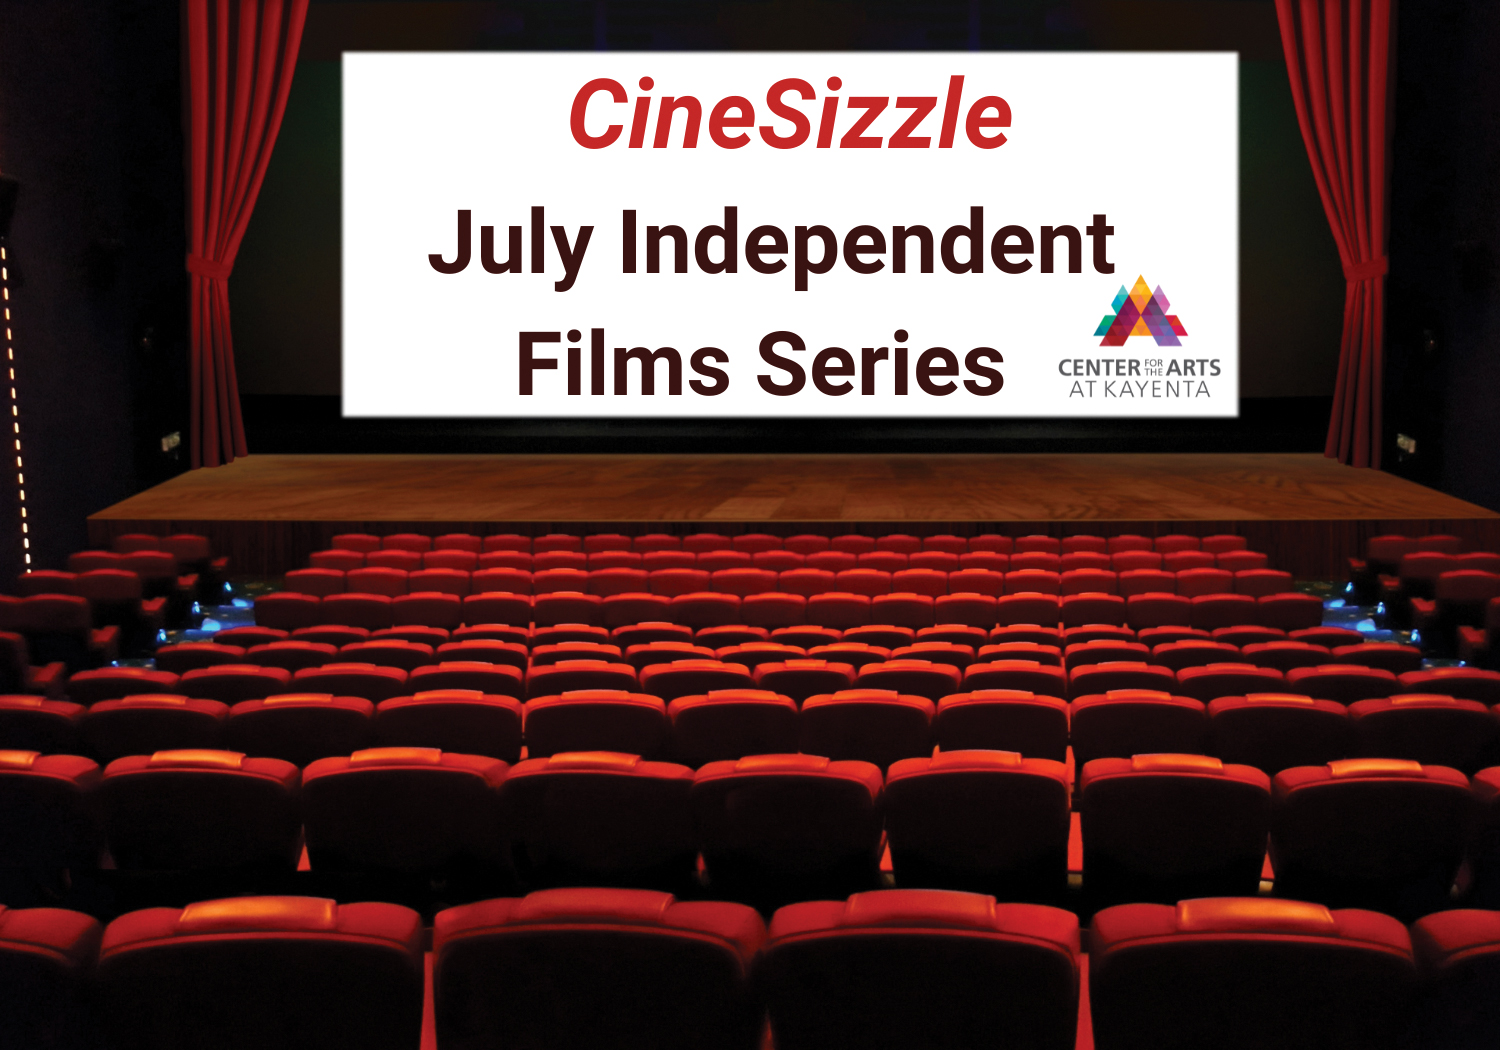 CineSizzle Independent Film Series